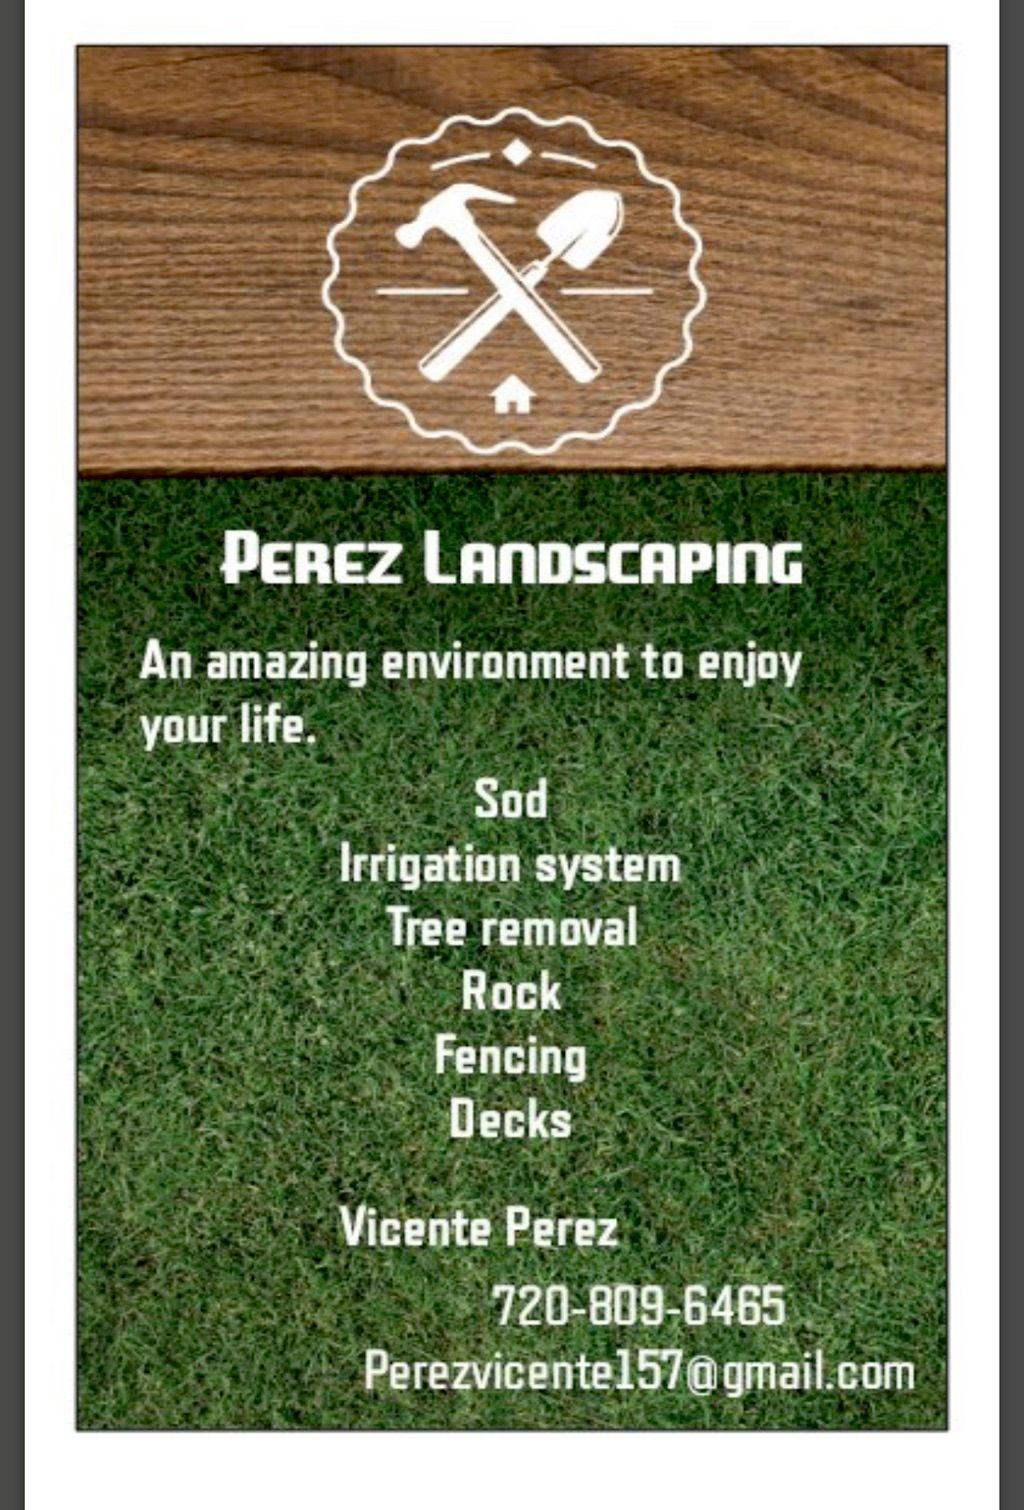 Perez landscaping